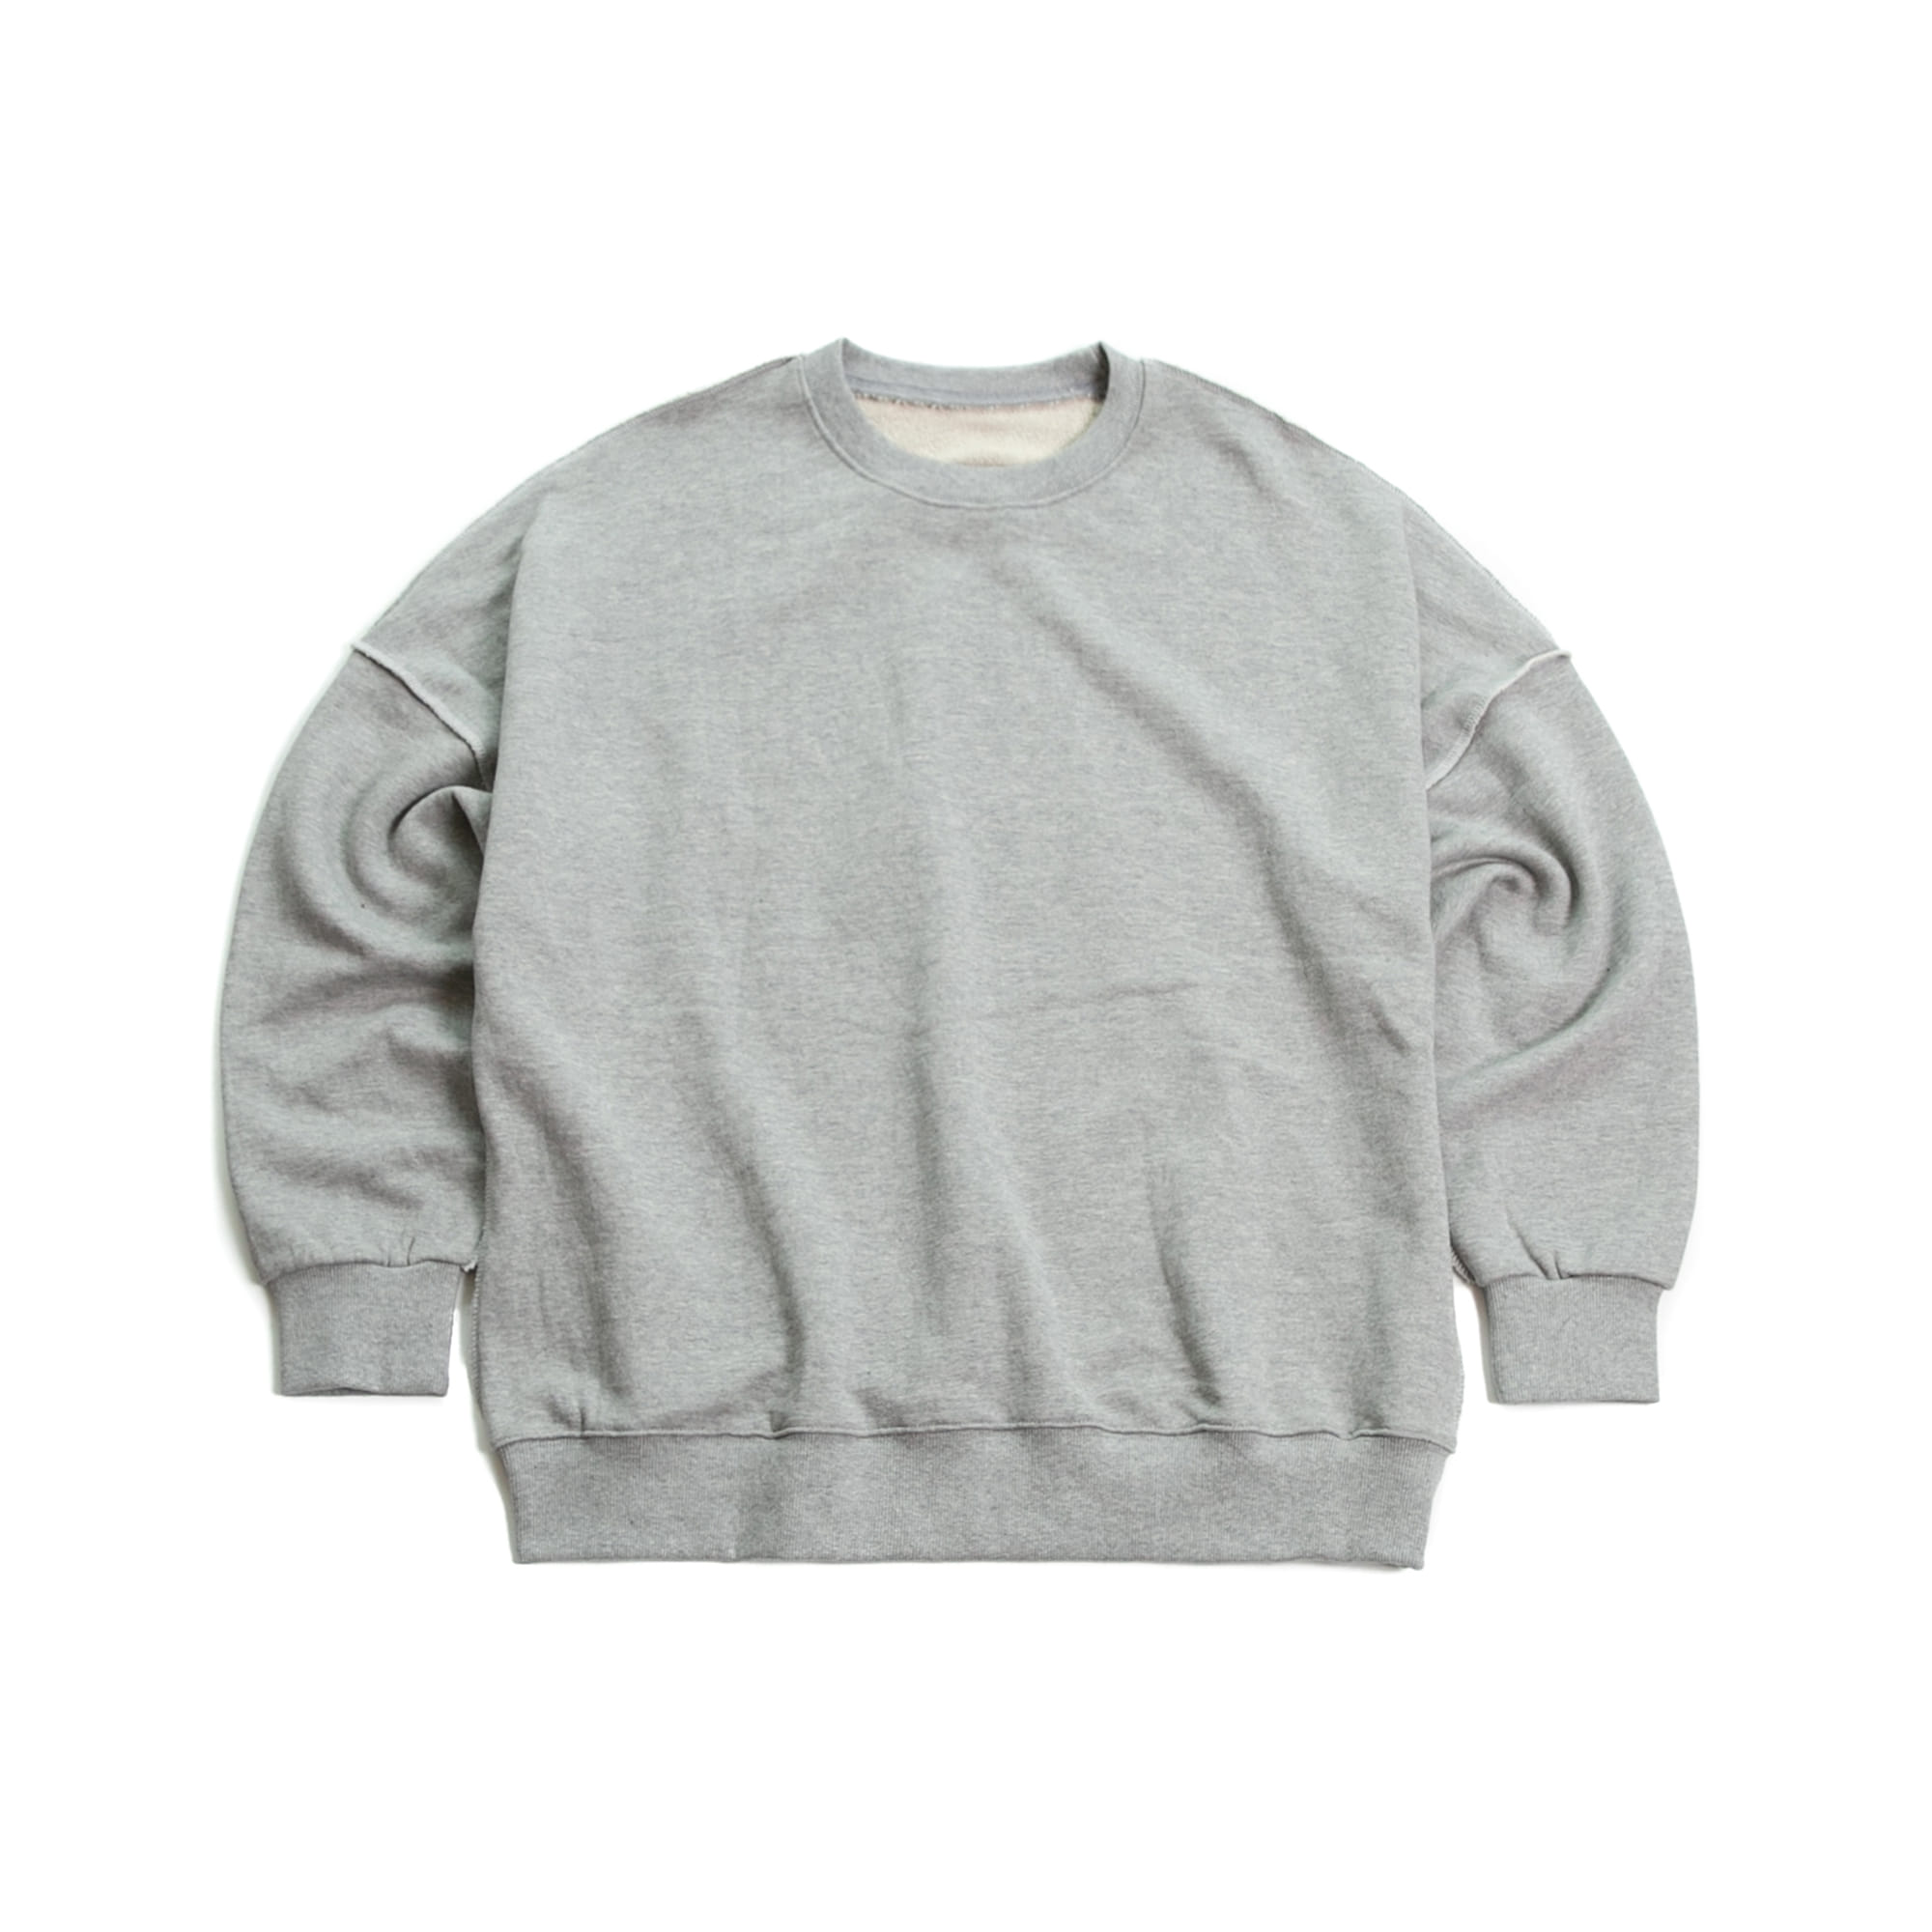 Stitch Over Sweat Shirt - Grey